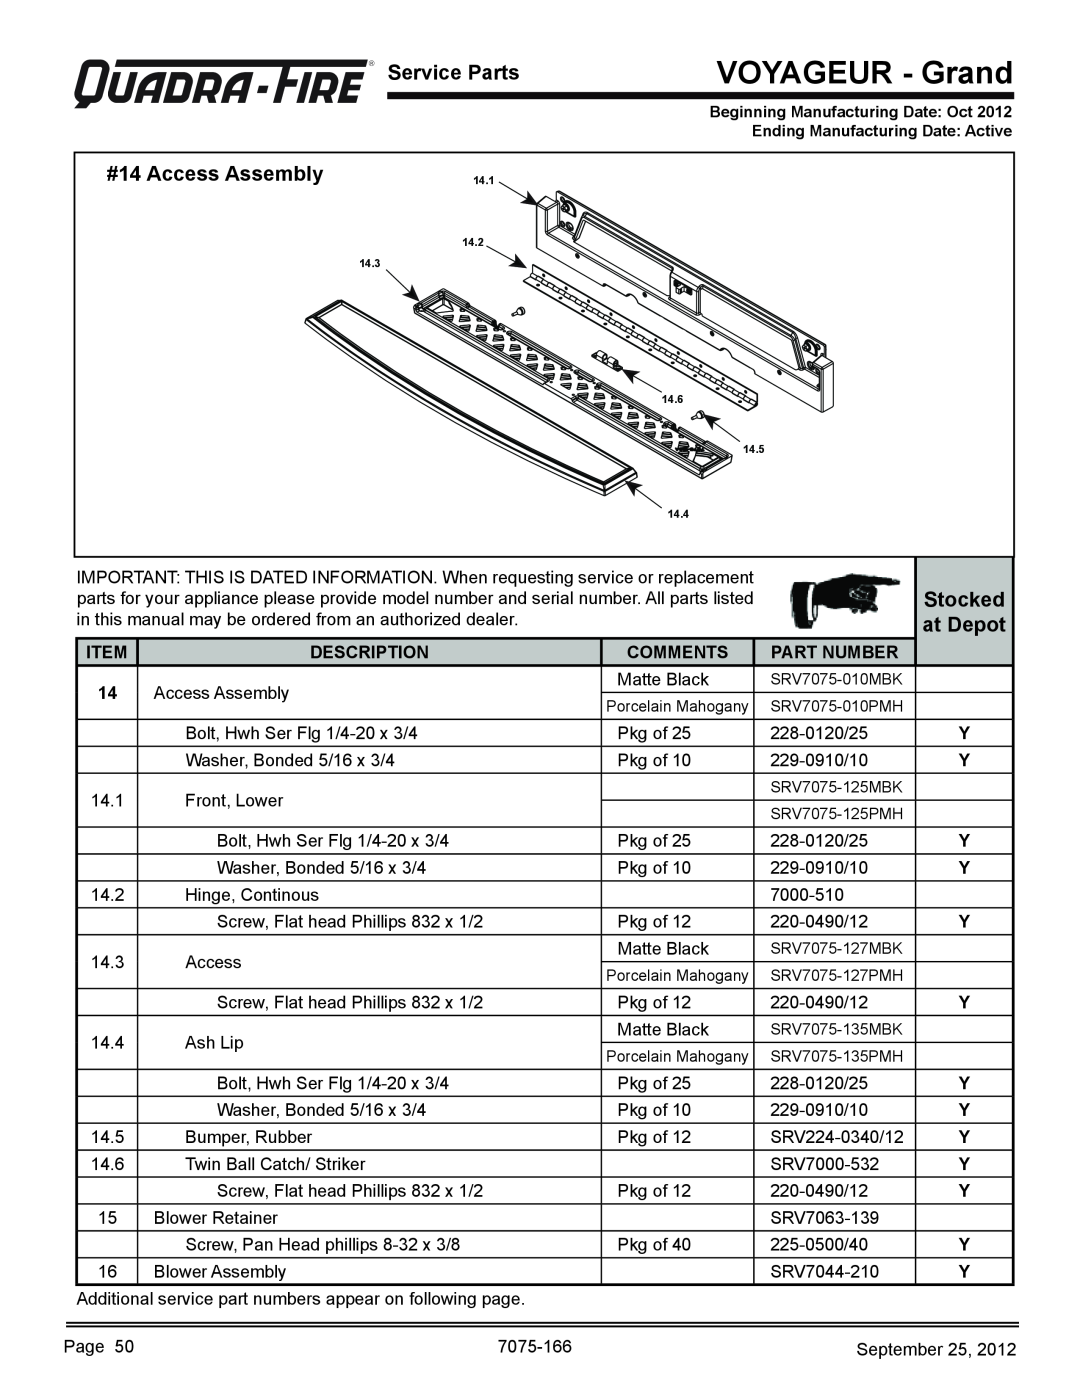 Radware VOYA-GRAND-MBK VOYAGEUR - Grand, R Service Parts, #14 Access Assembly, Stocked, at Depot, Description, Comments 